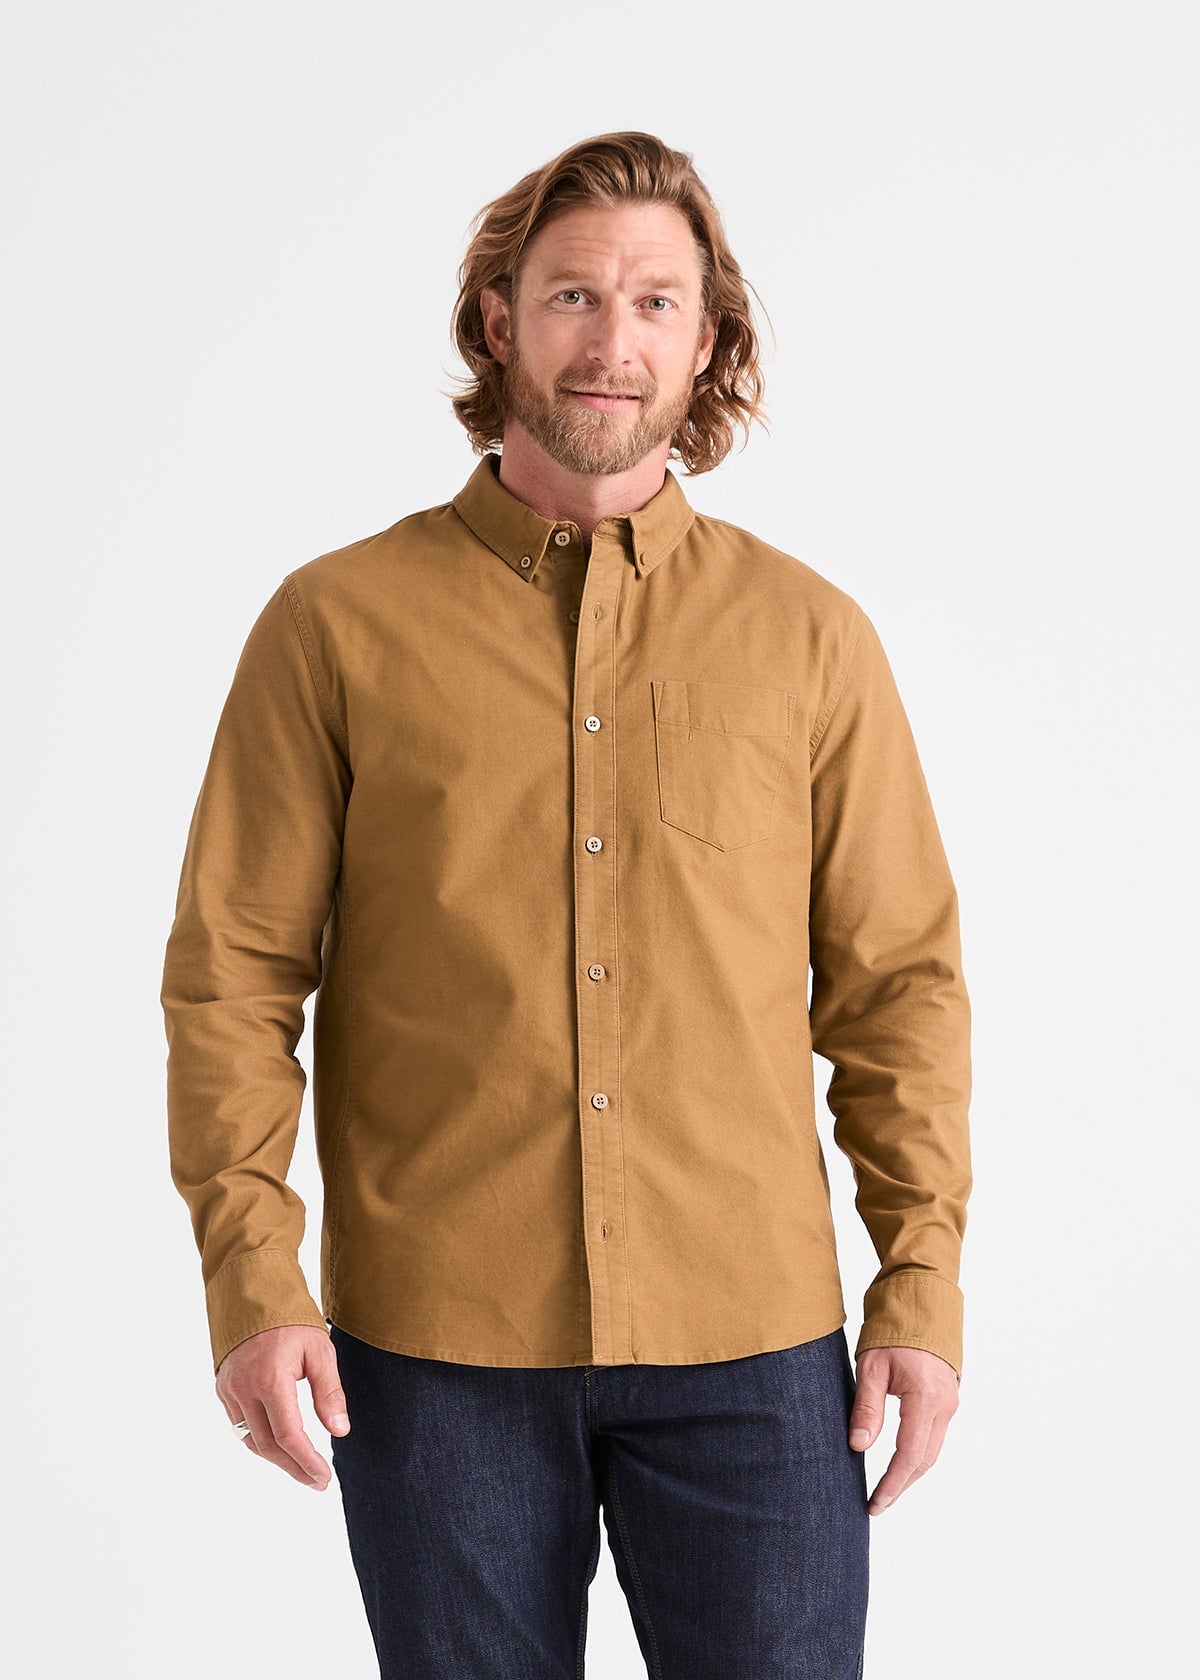 mens khaki stretch button down shirt front